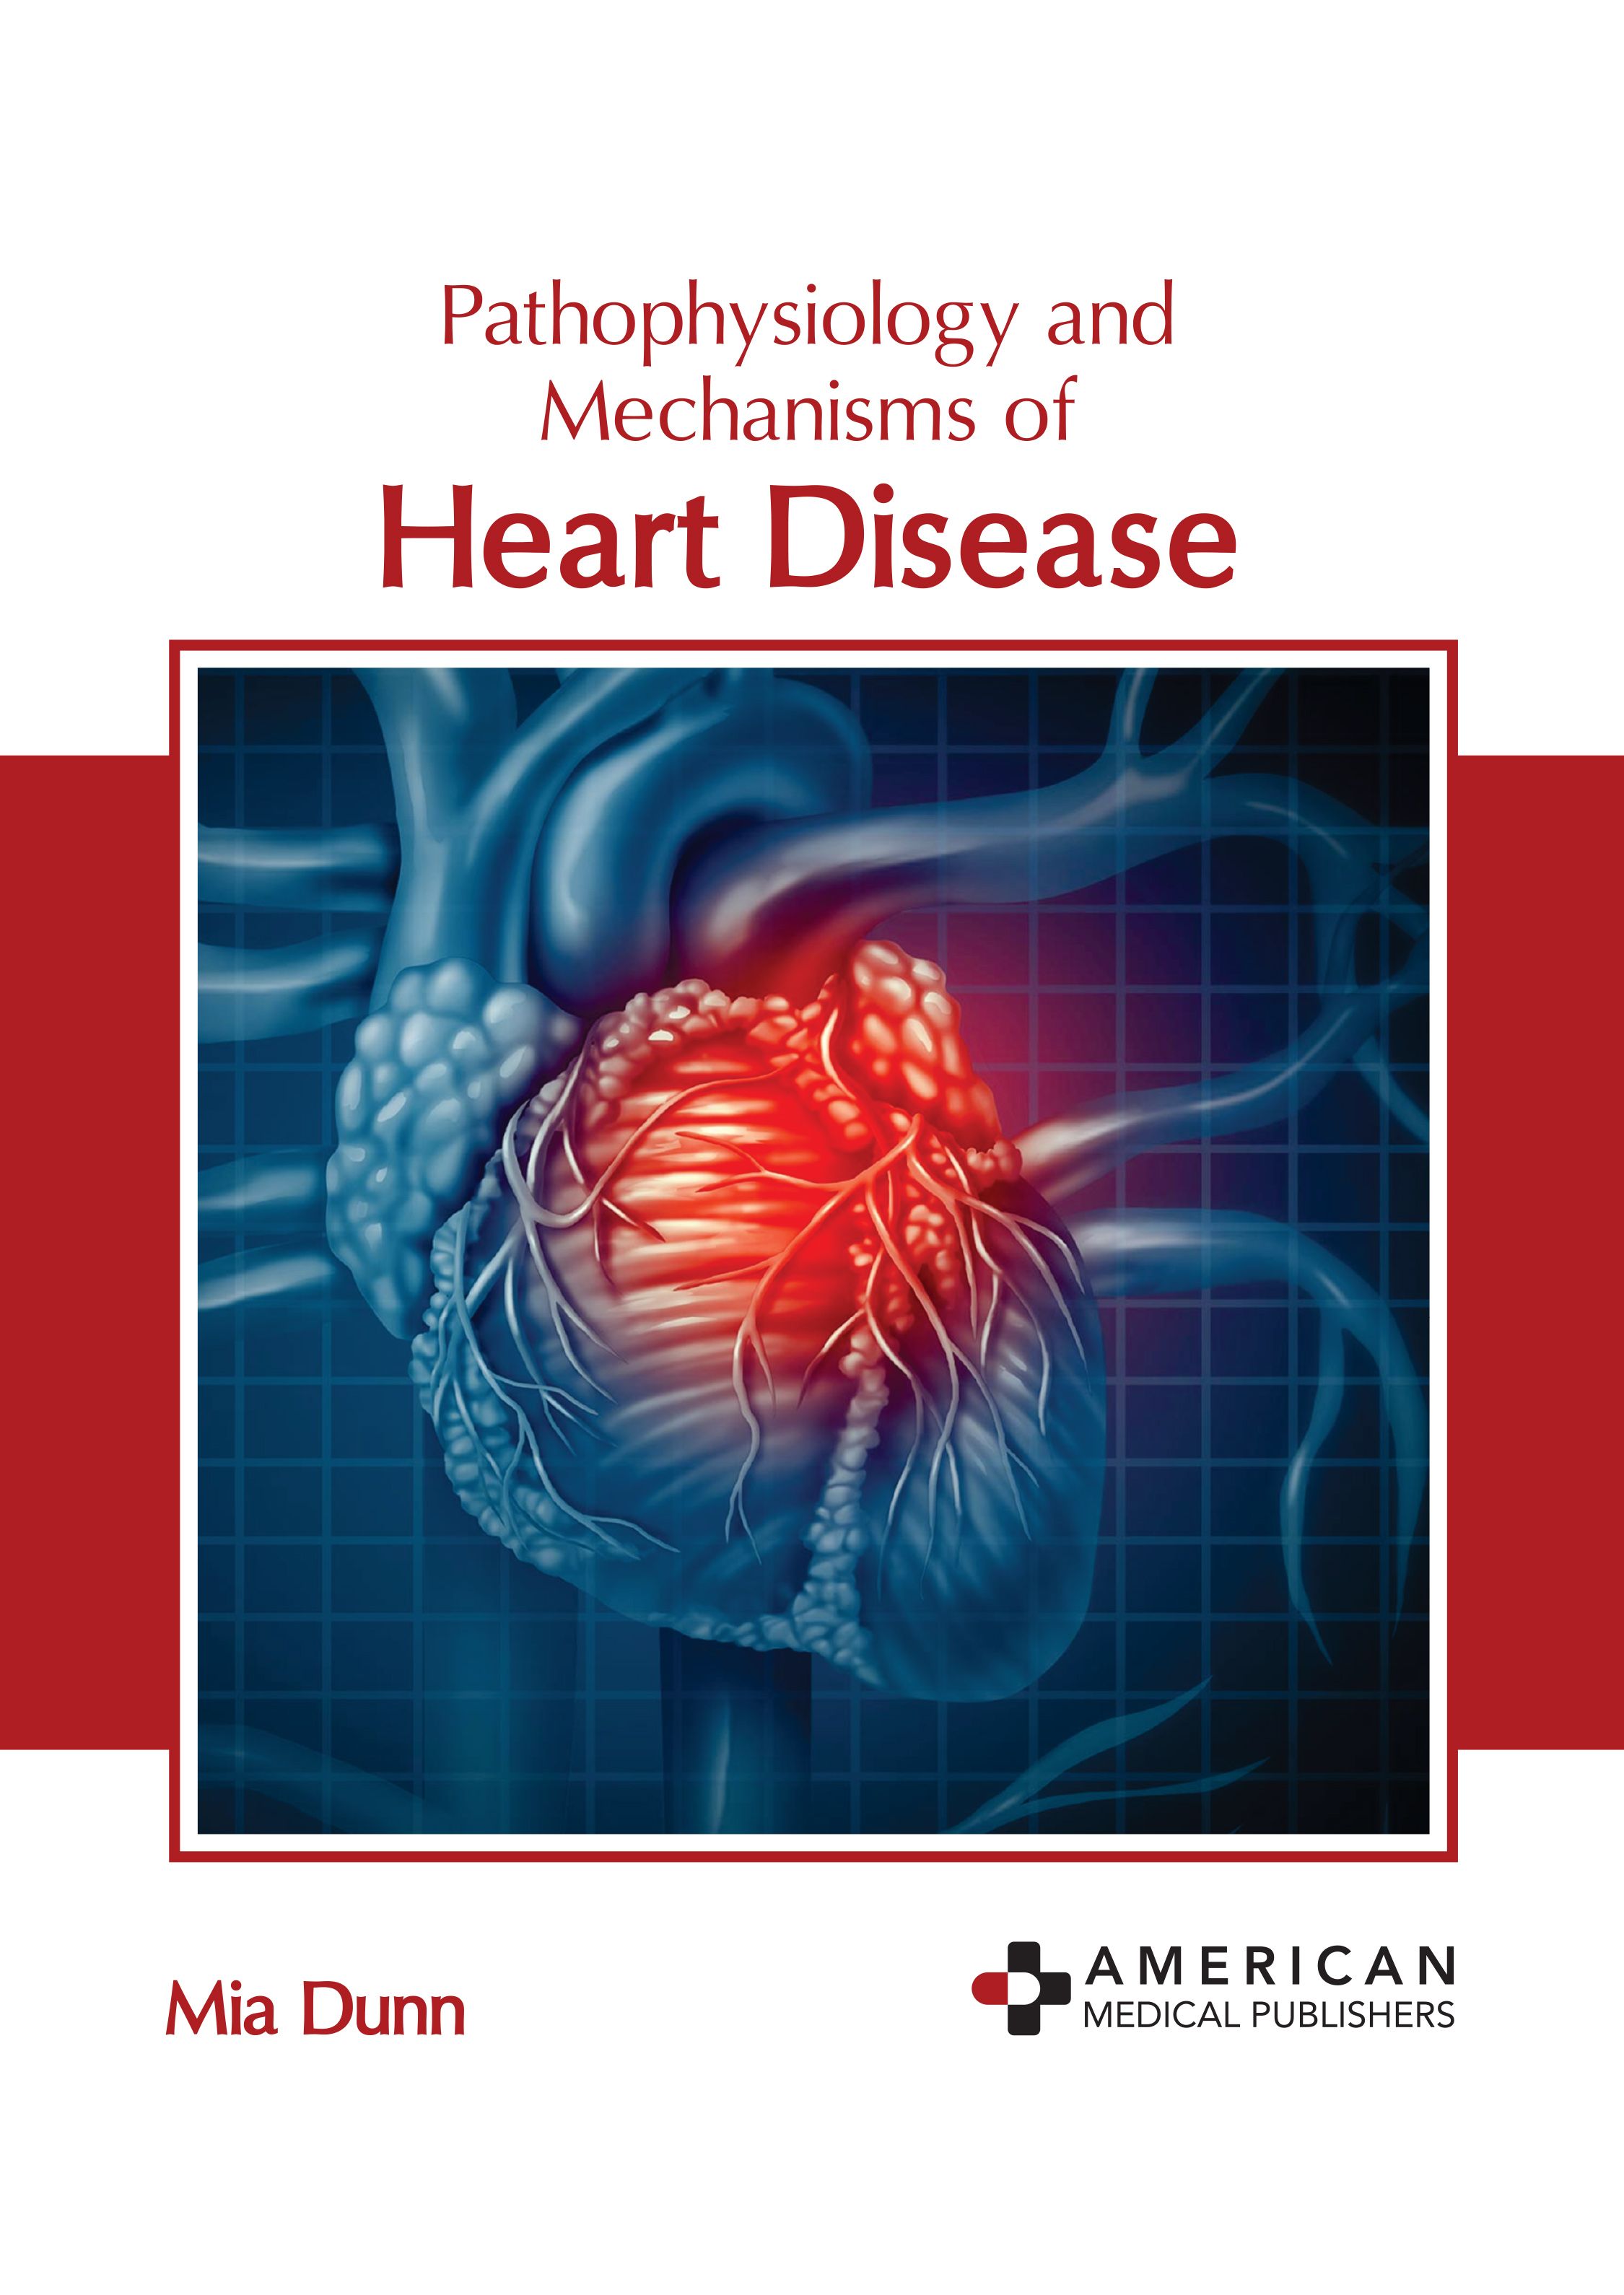 PATHOPHYSIOLOGY AND MECHANISMS OF HEART DISEASE